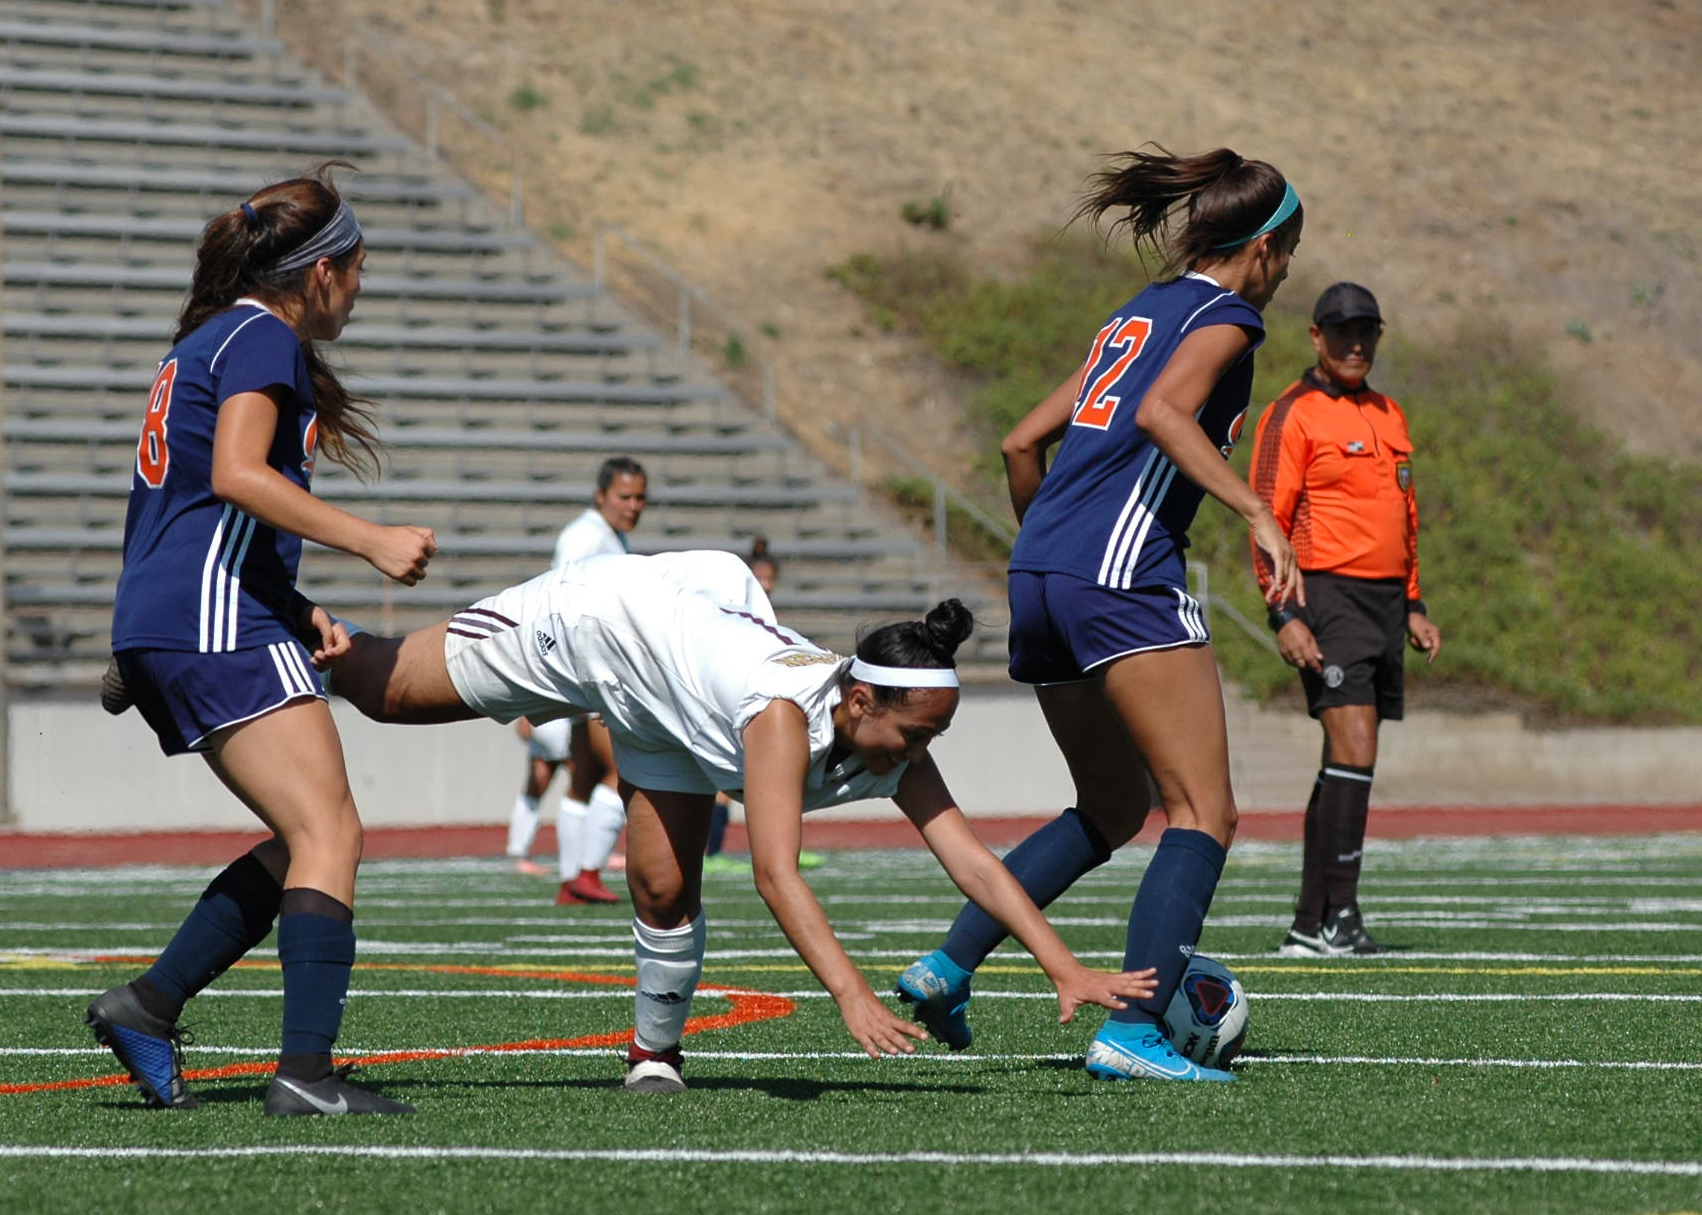 Zeanna Silva(12) and Brianna Jara(18) team up to steal the ball. Image: Thomas Garcia